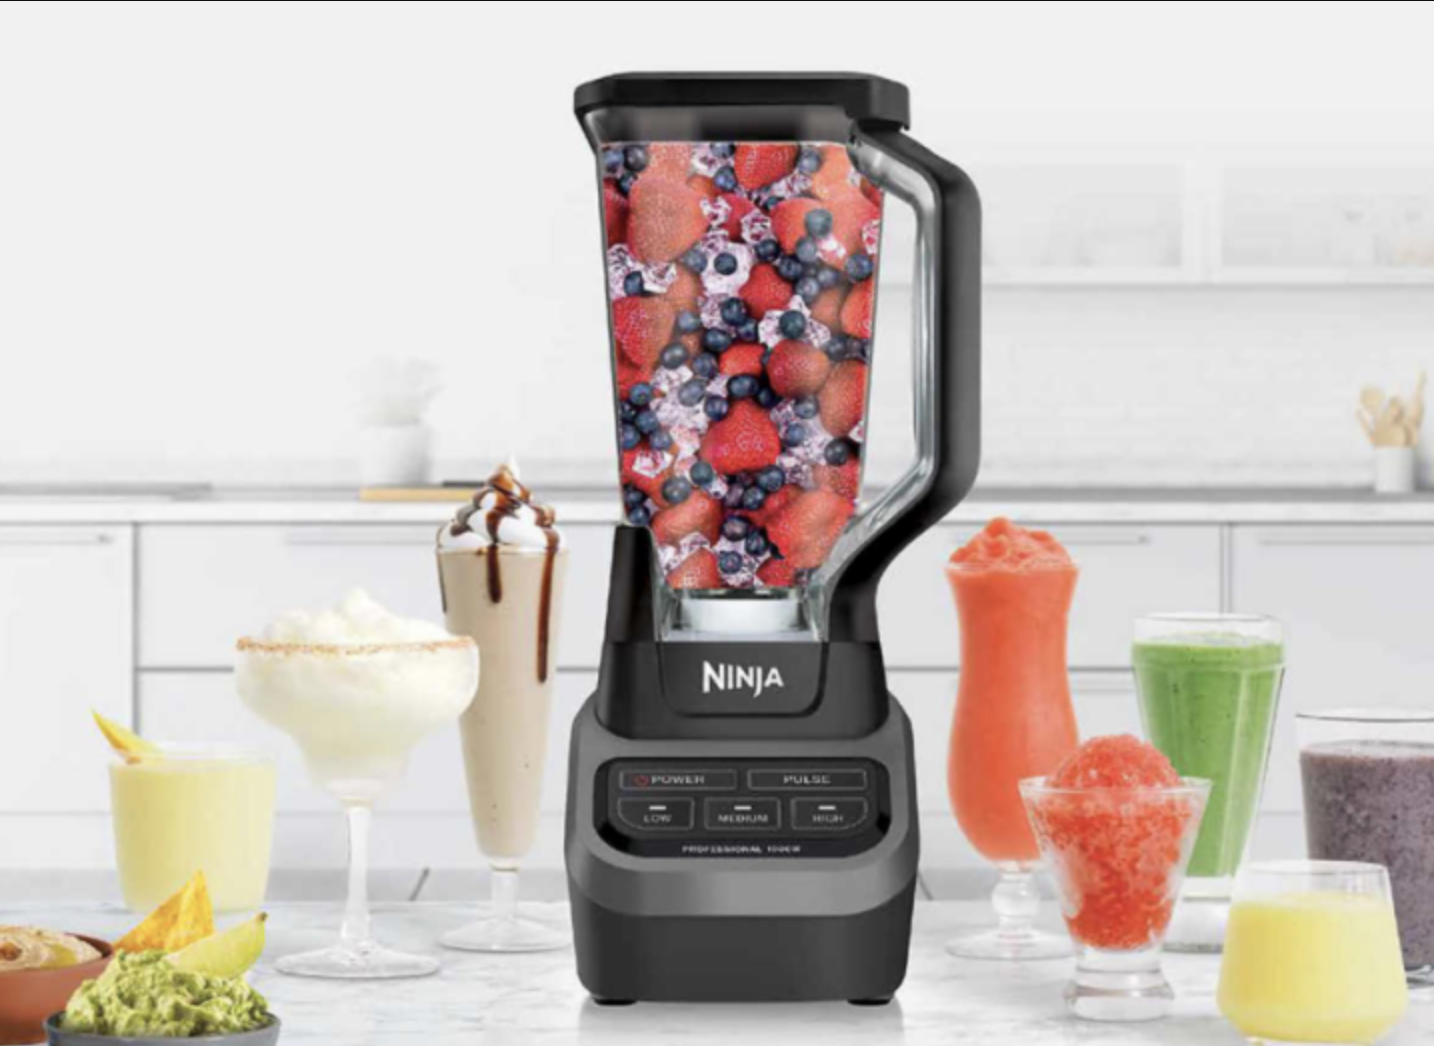 Ninja Prime Day sale up to $100 off: Blenders, cookers, knife sets